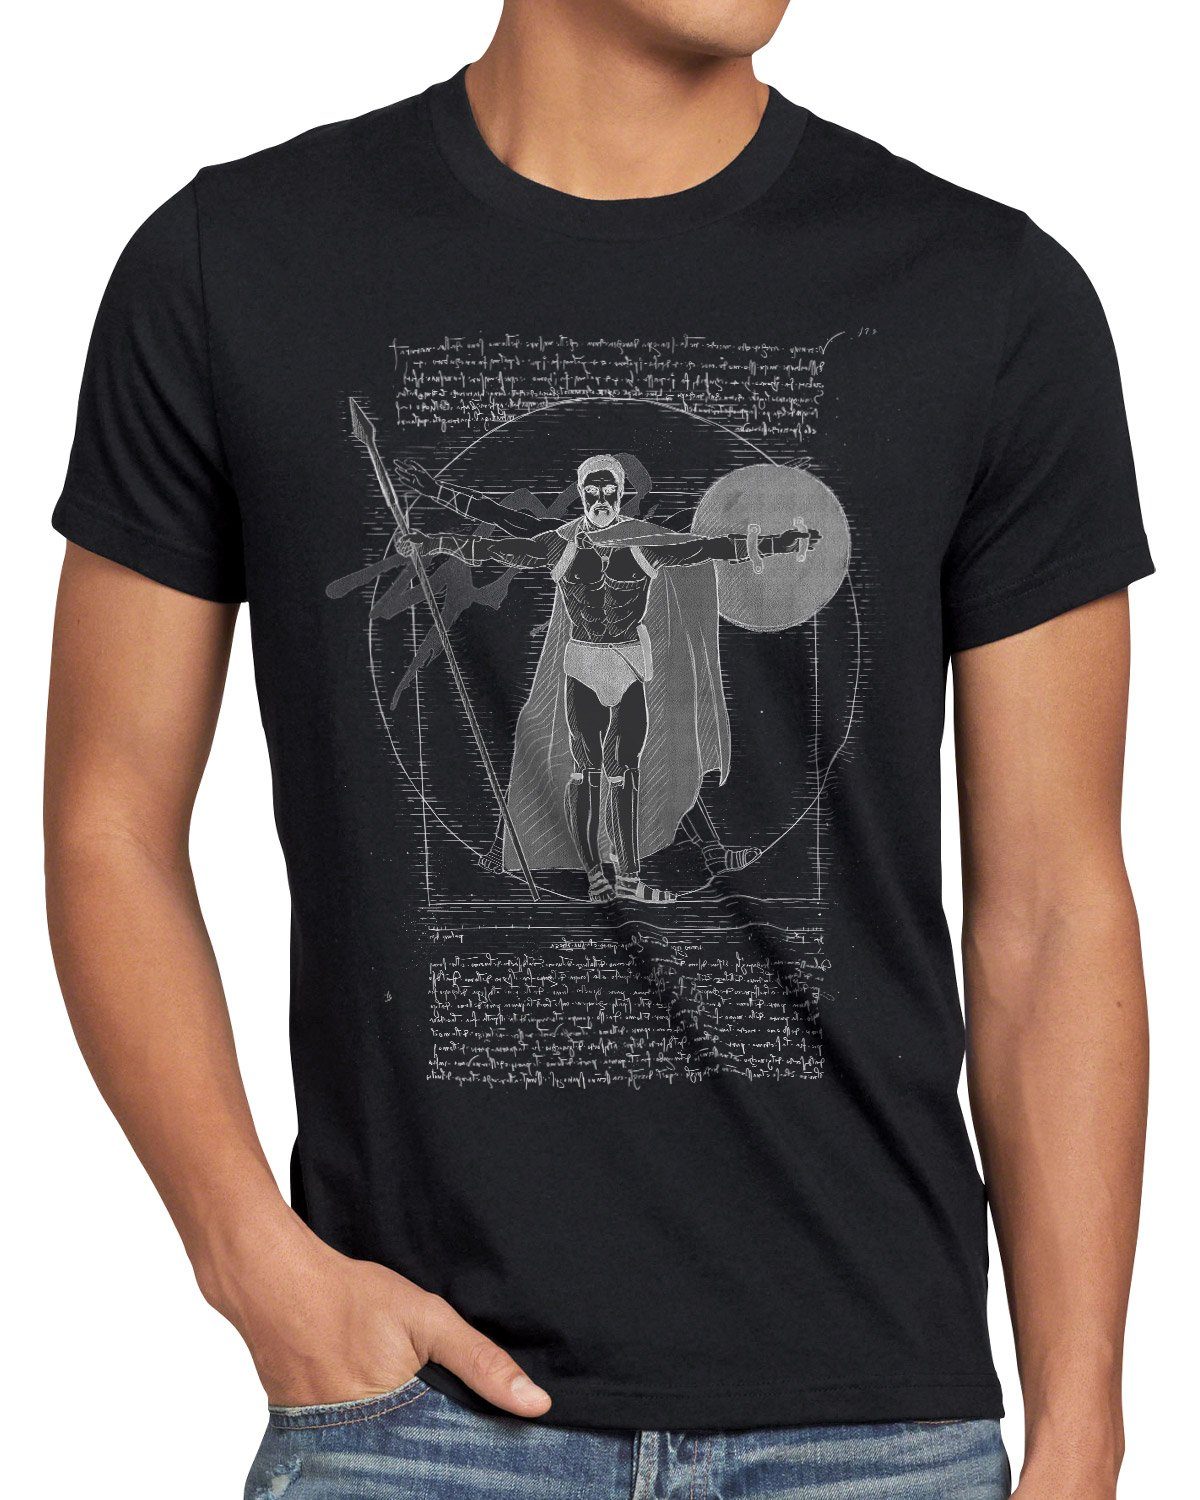 style3 Print-Shirt schwarz dreihundert Spartaner Vitruvianischer 300 Herren T-Shirt kämpfer antiker